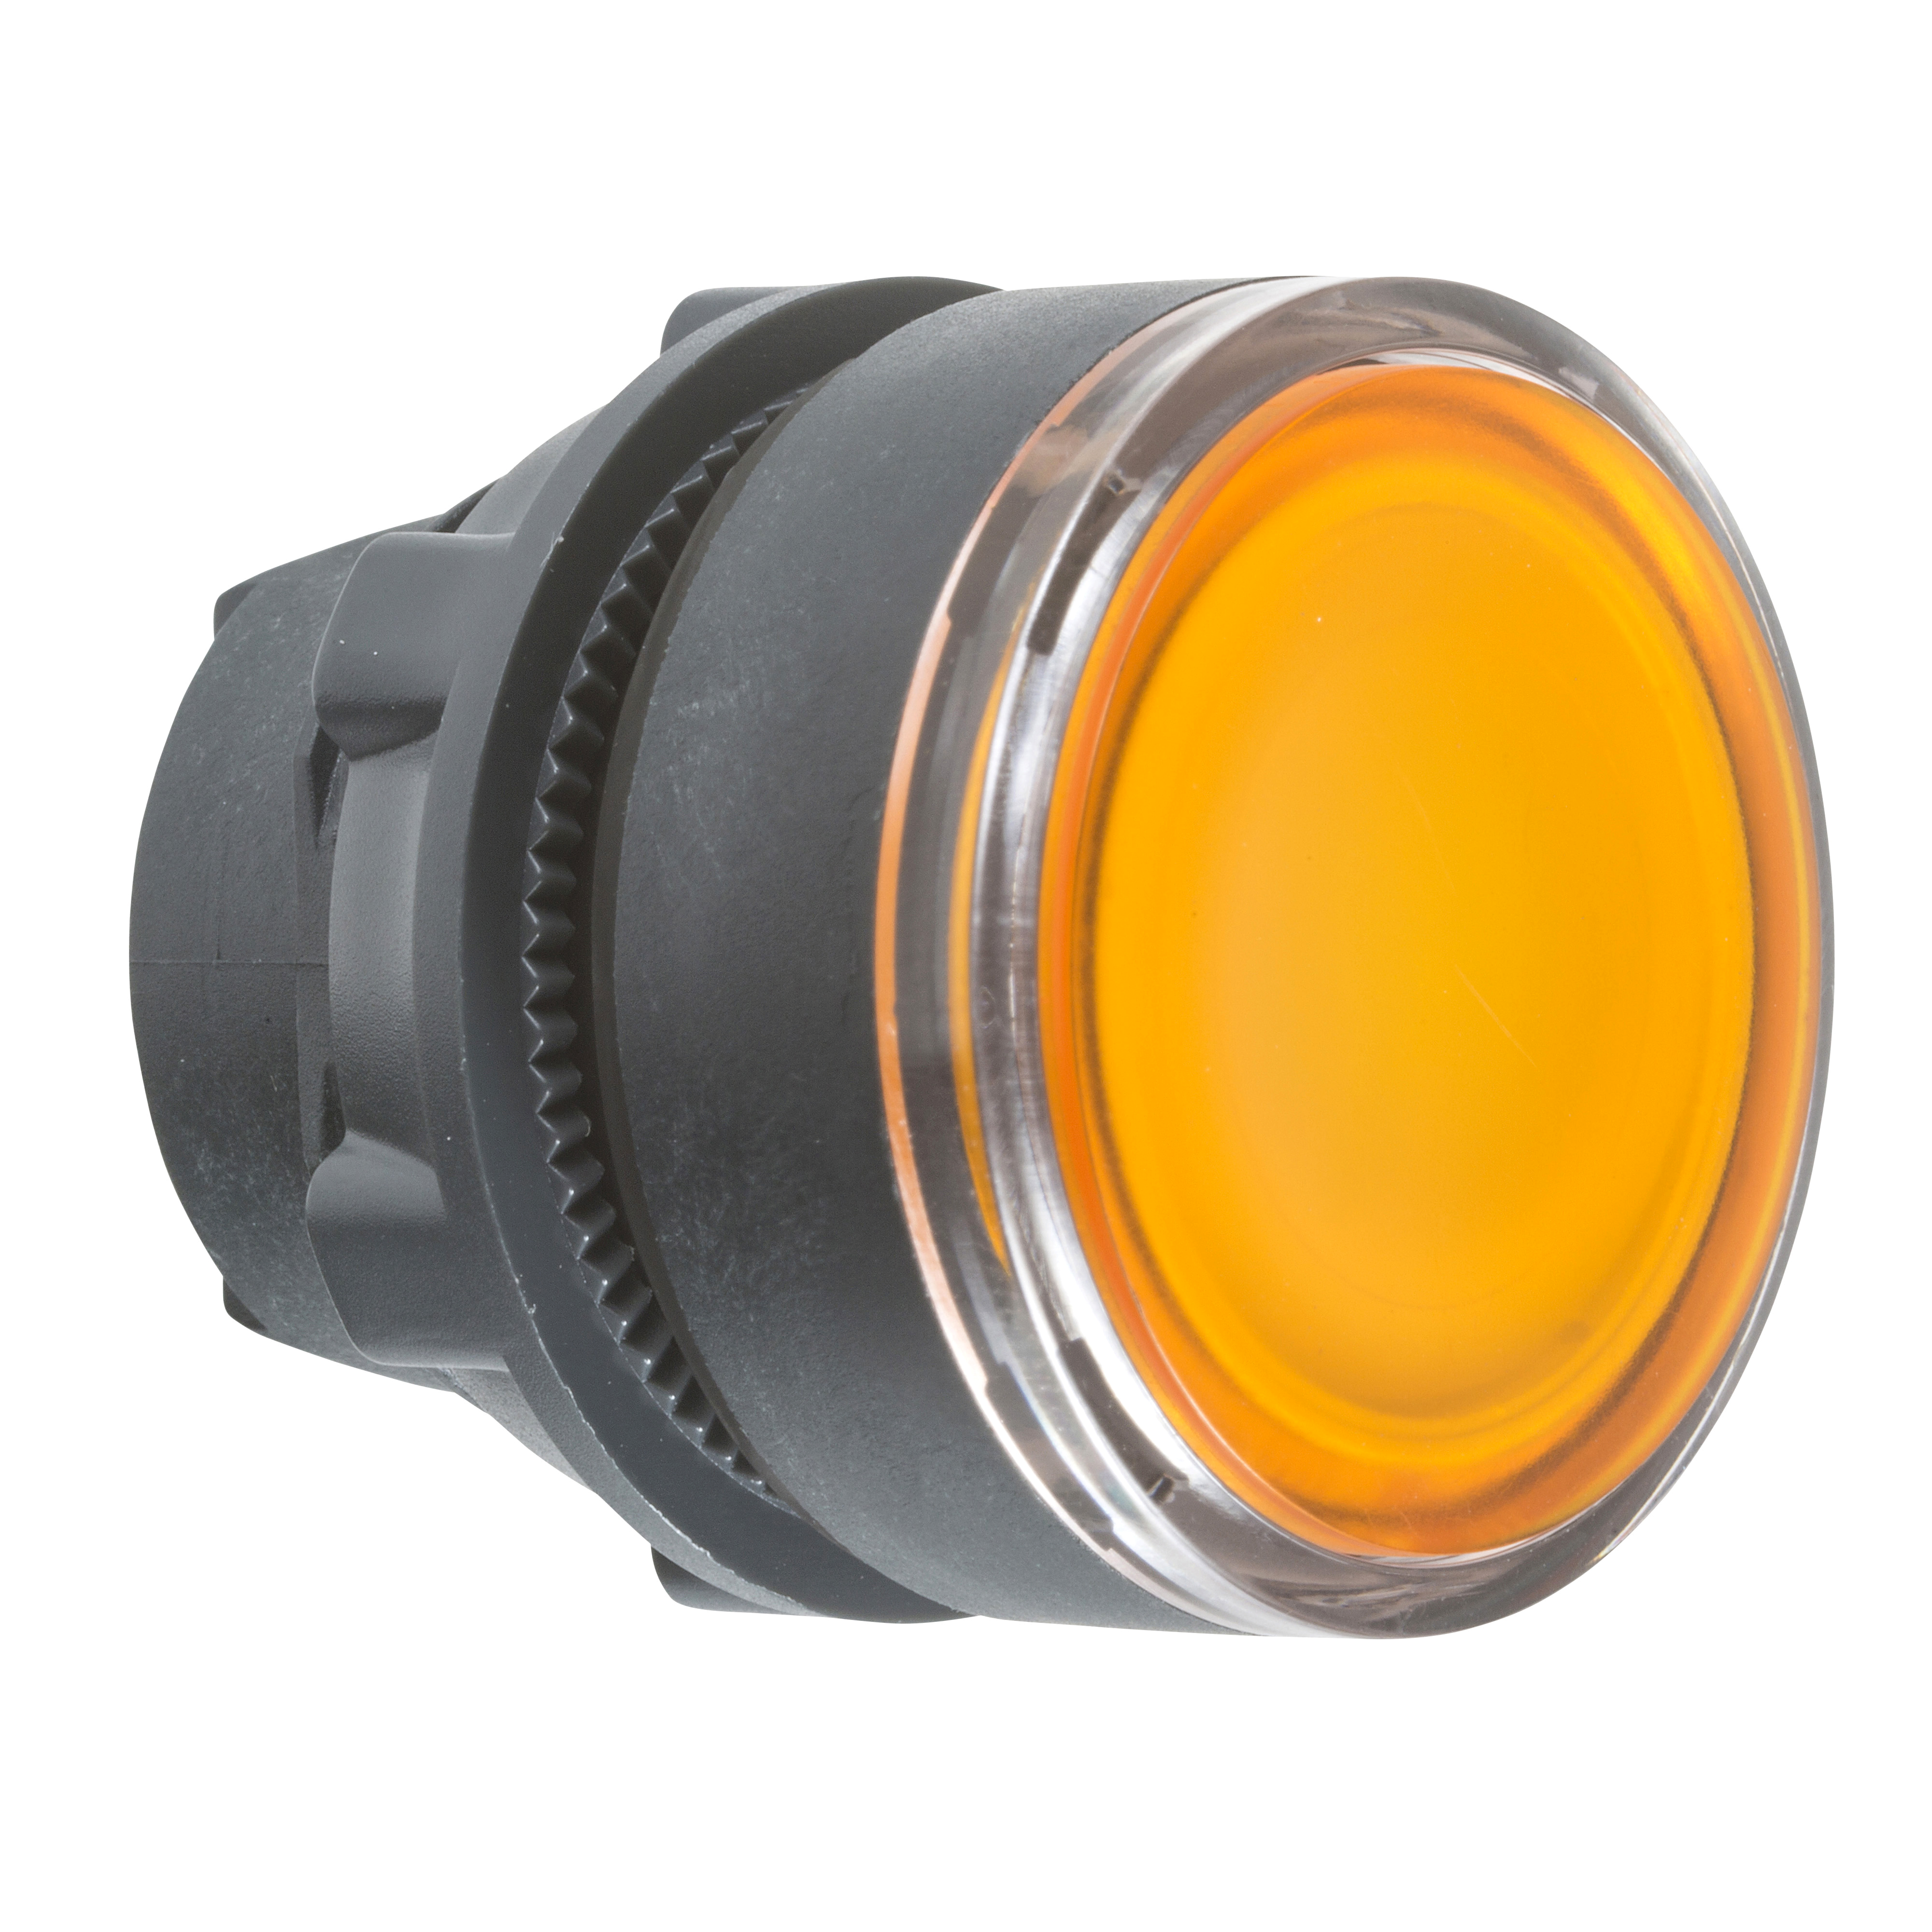 ZB5AW353 - Head for illuminated push button, Harmony XB5, plastic, orange flush, 22mm, universal LED